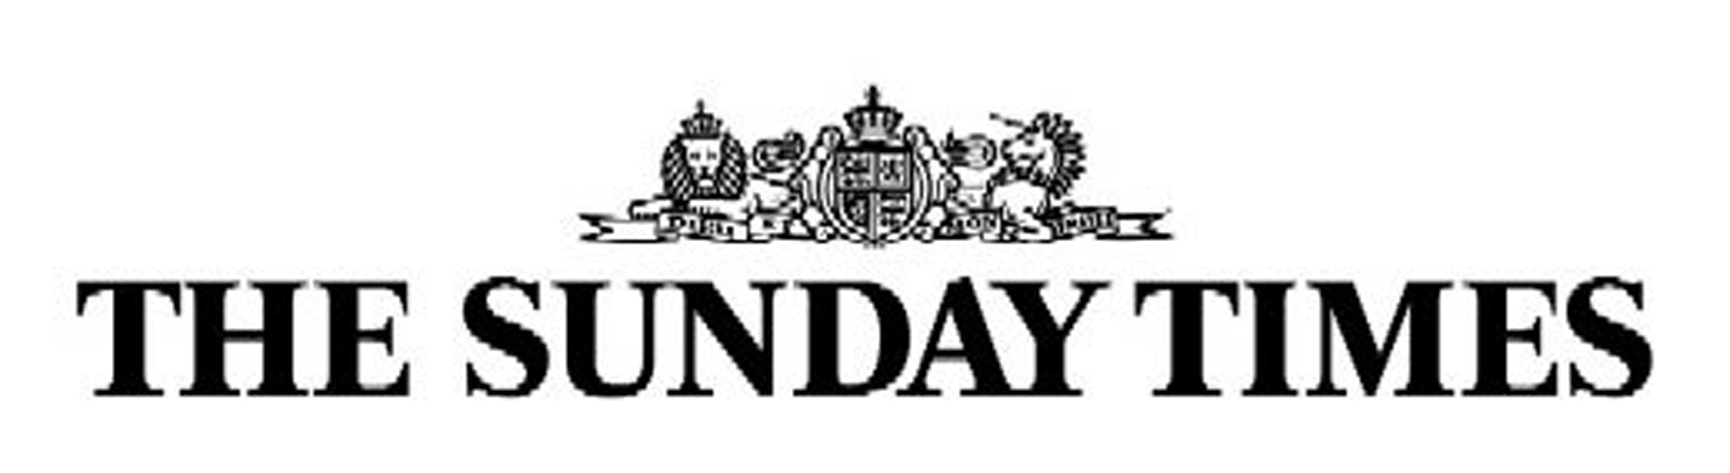 sunday-times-logo11.jpg